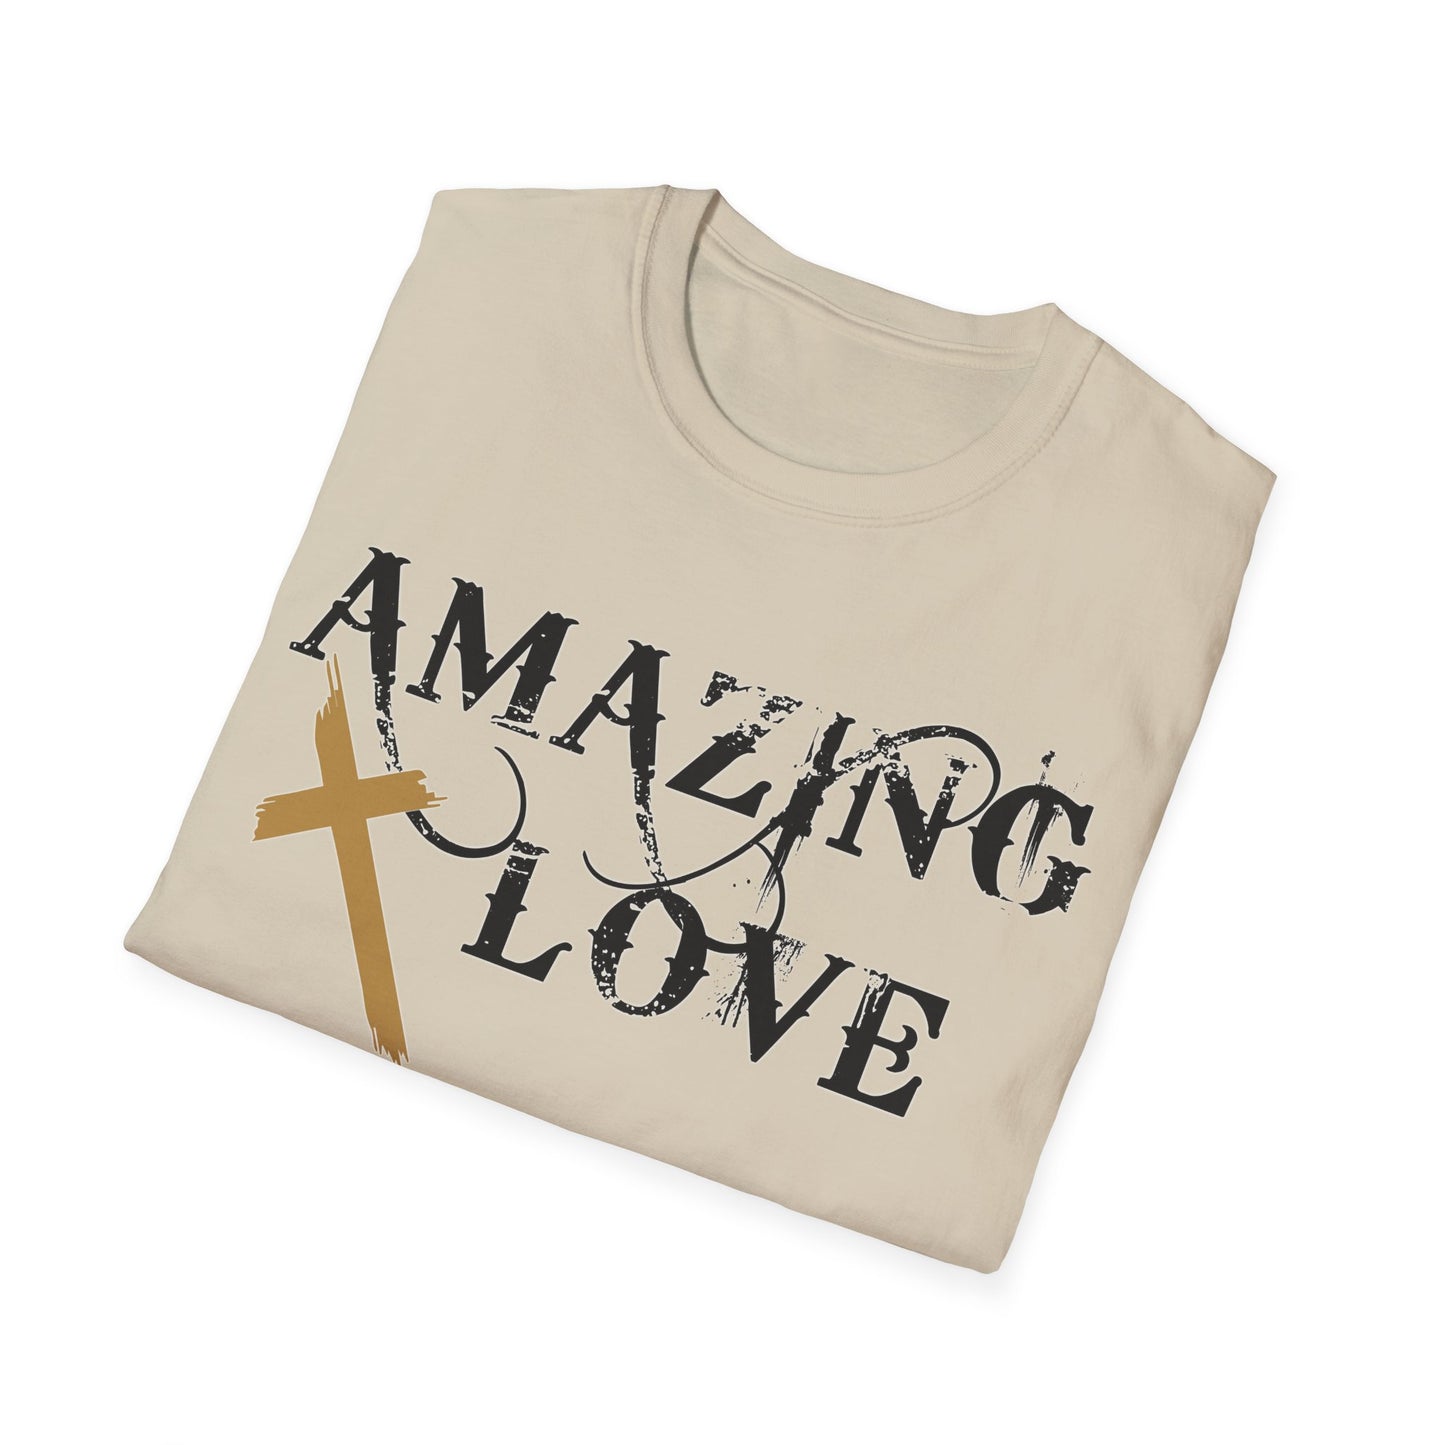 Amazing Love mens T-Shirt